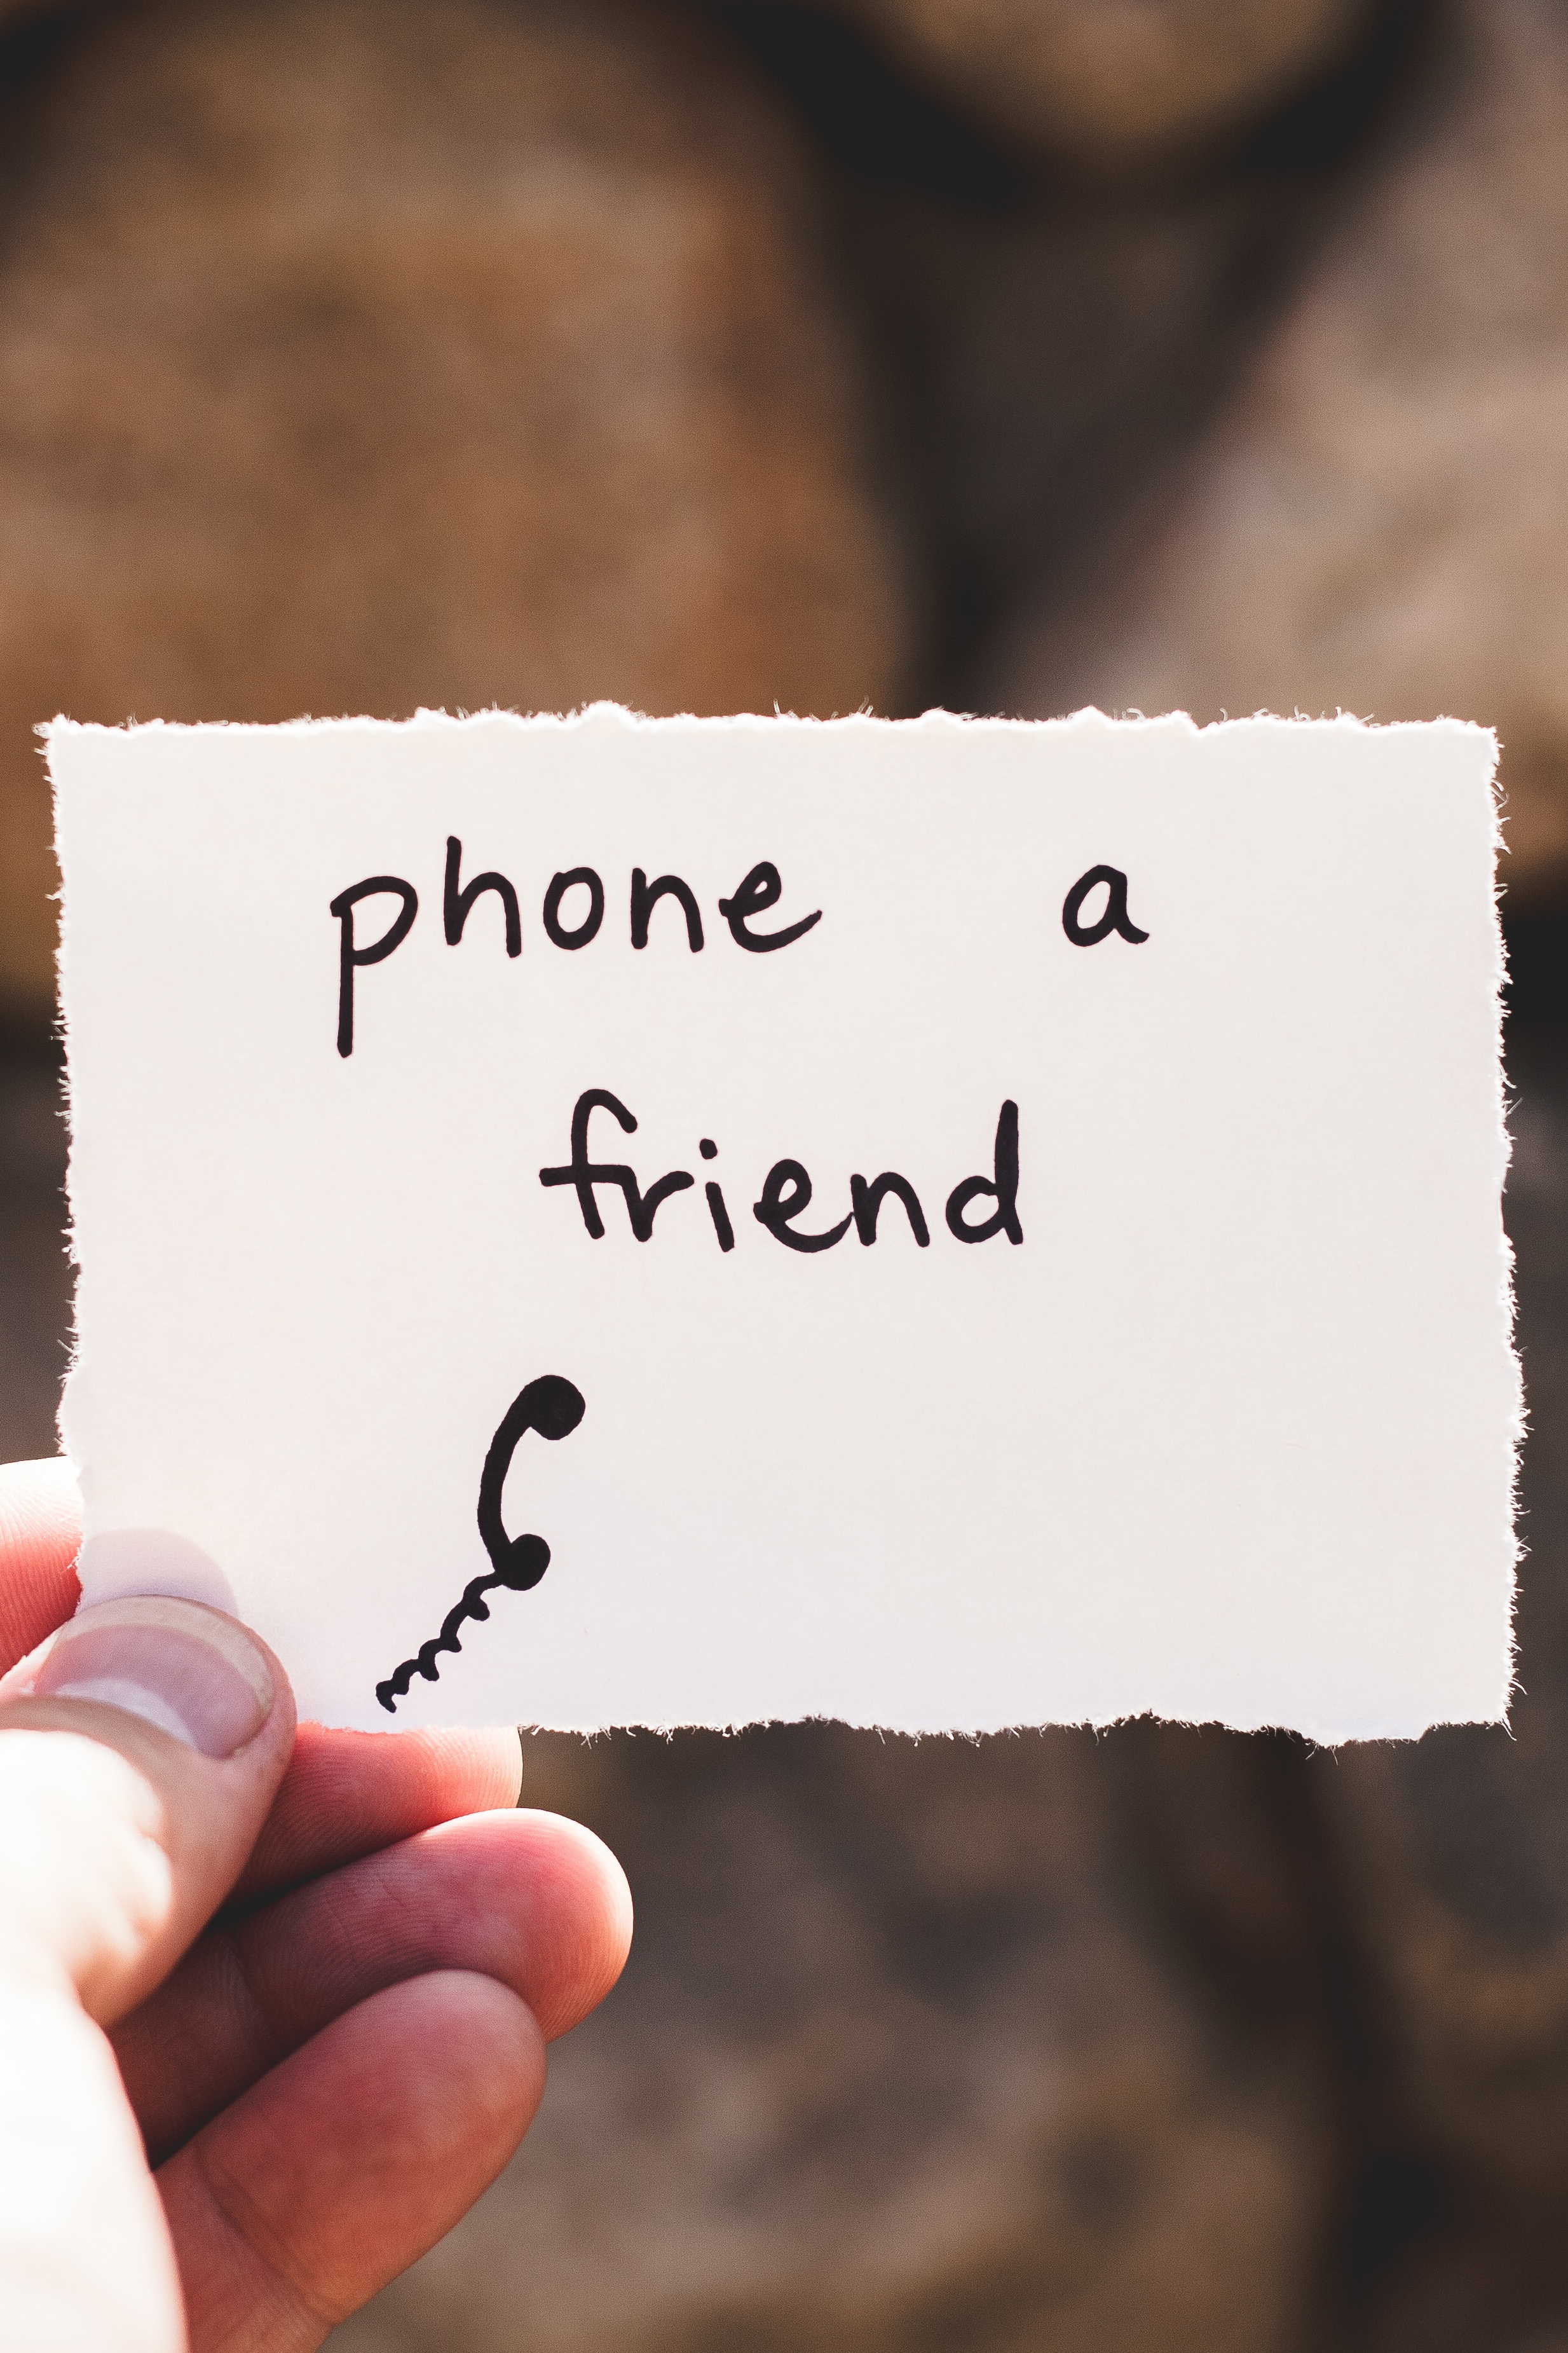 card in a hand reads phone a friend